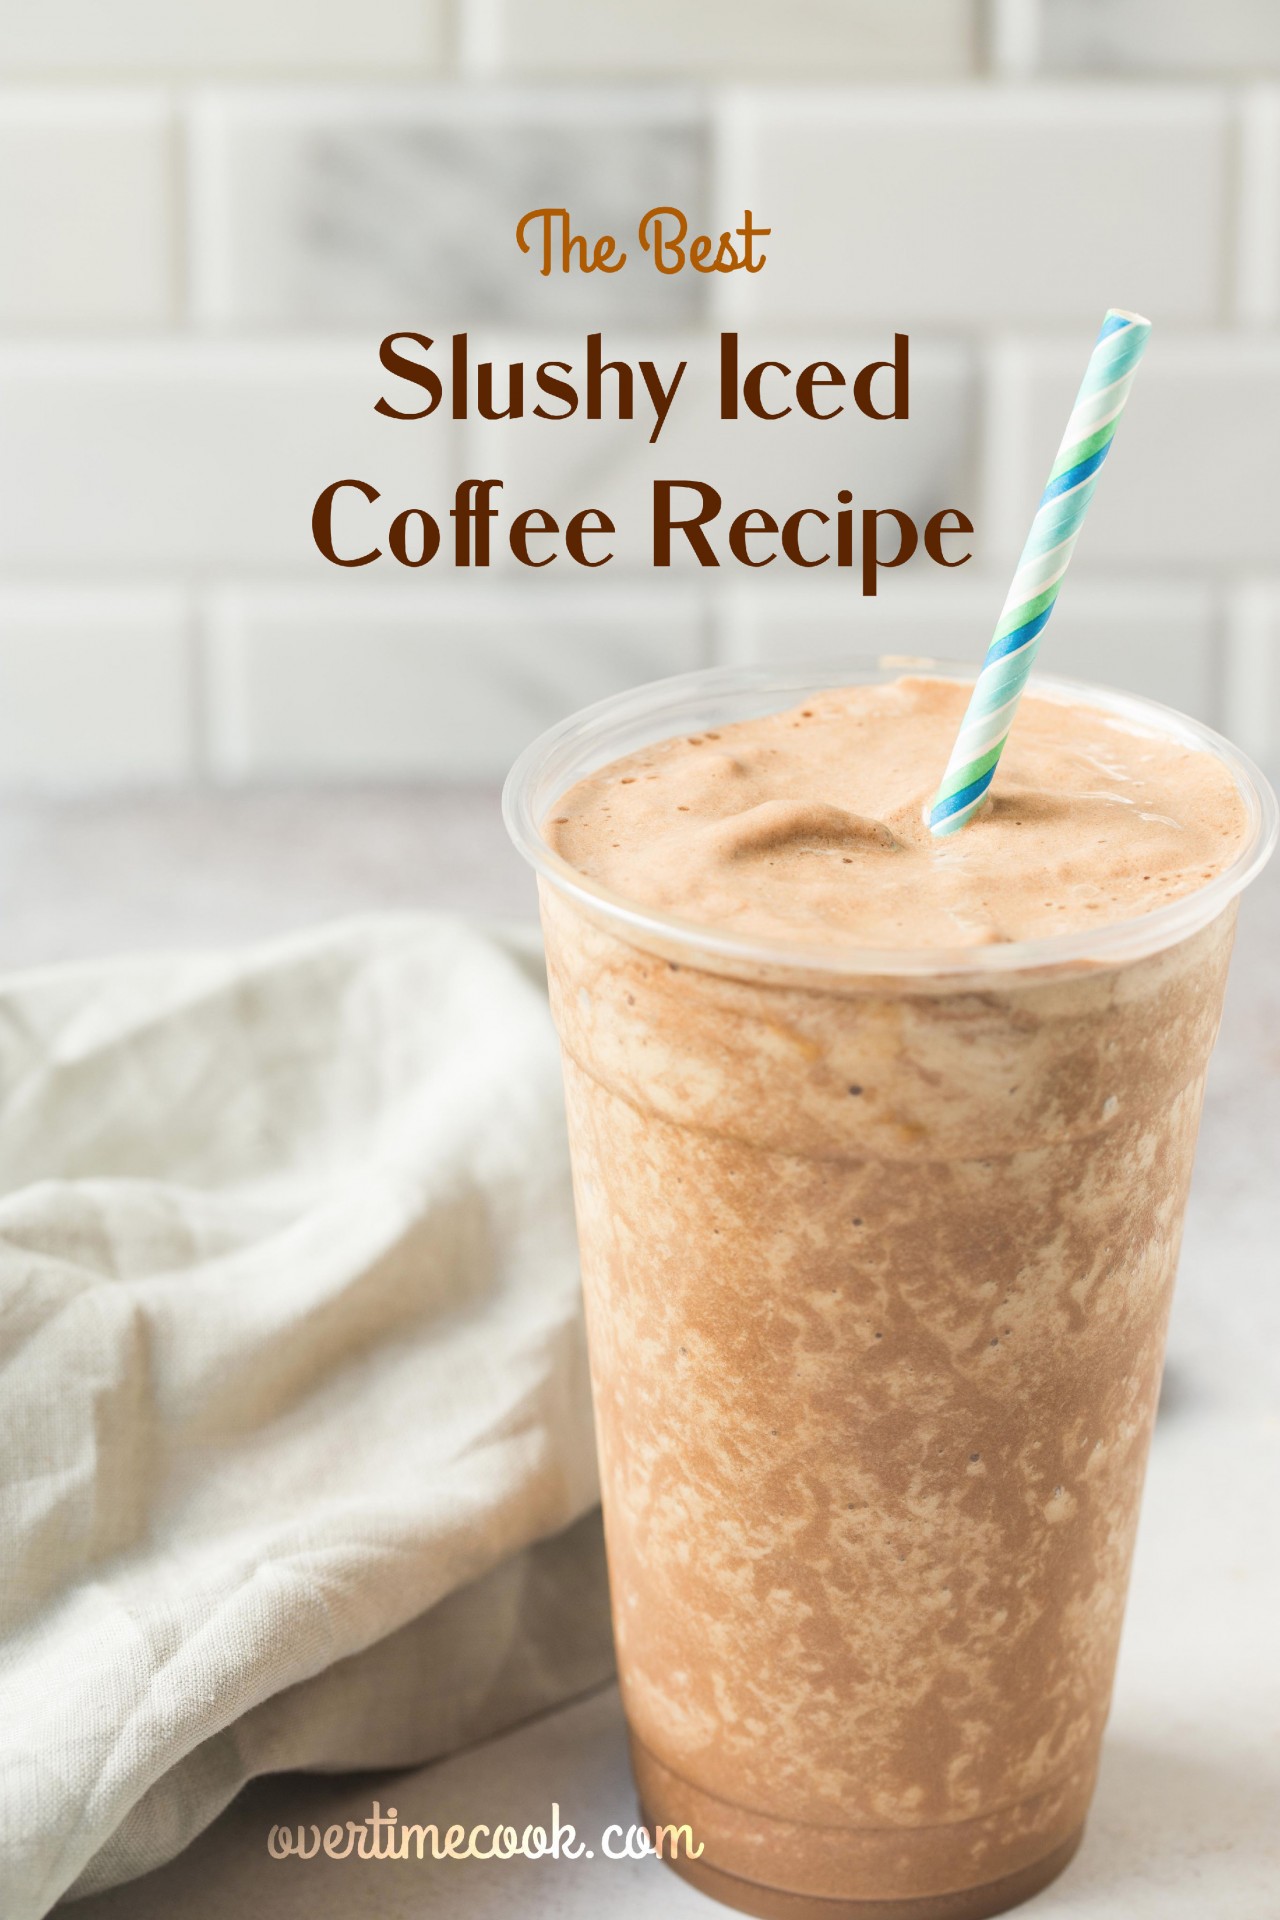 https://overtimecook.com/wp-content/uploads/2021/06/the-best-slushy-iced-coffee-recipe31.jpg